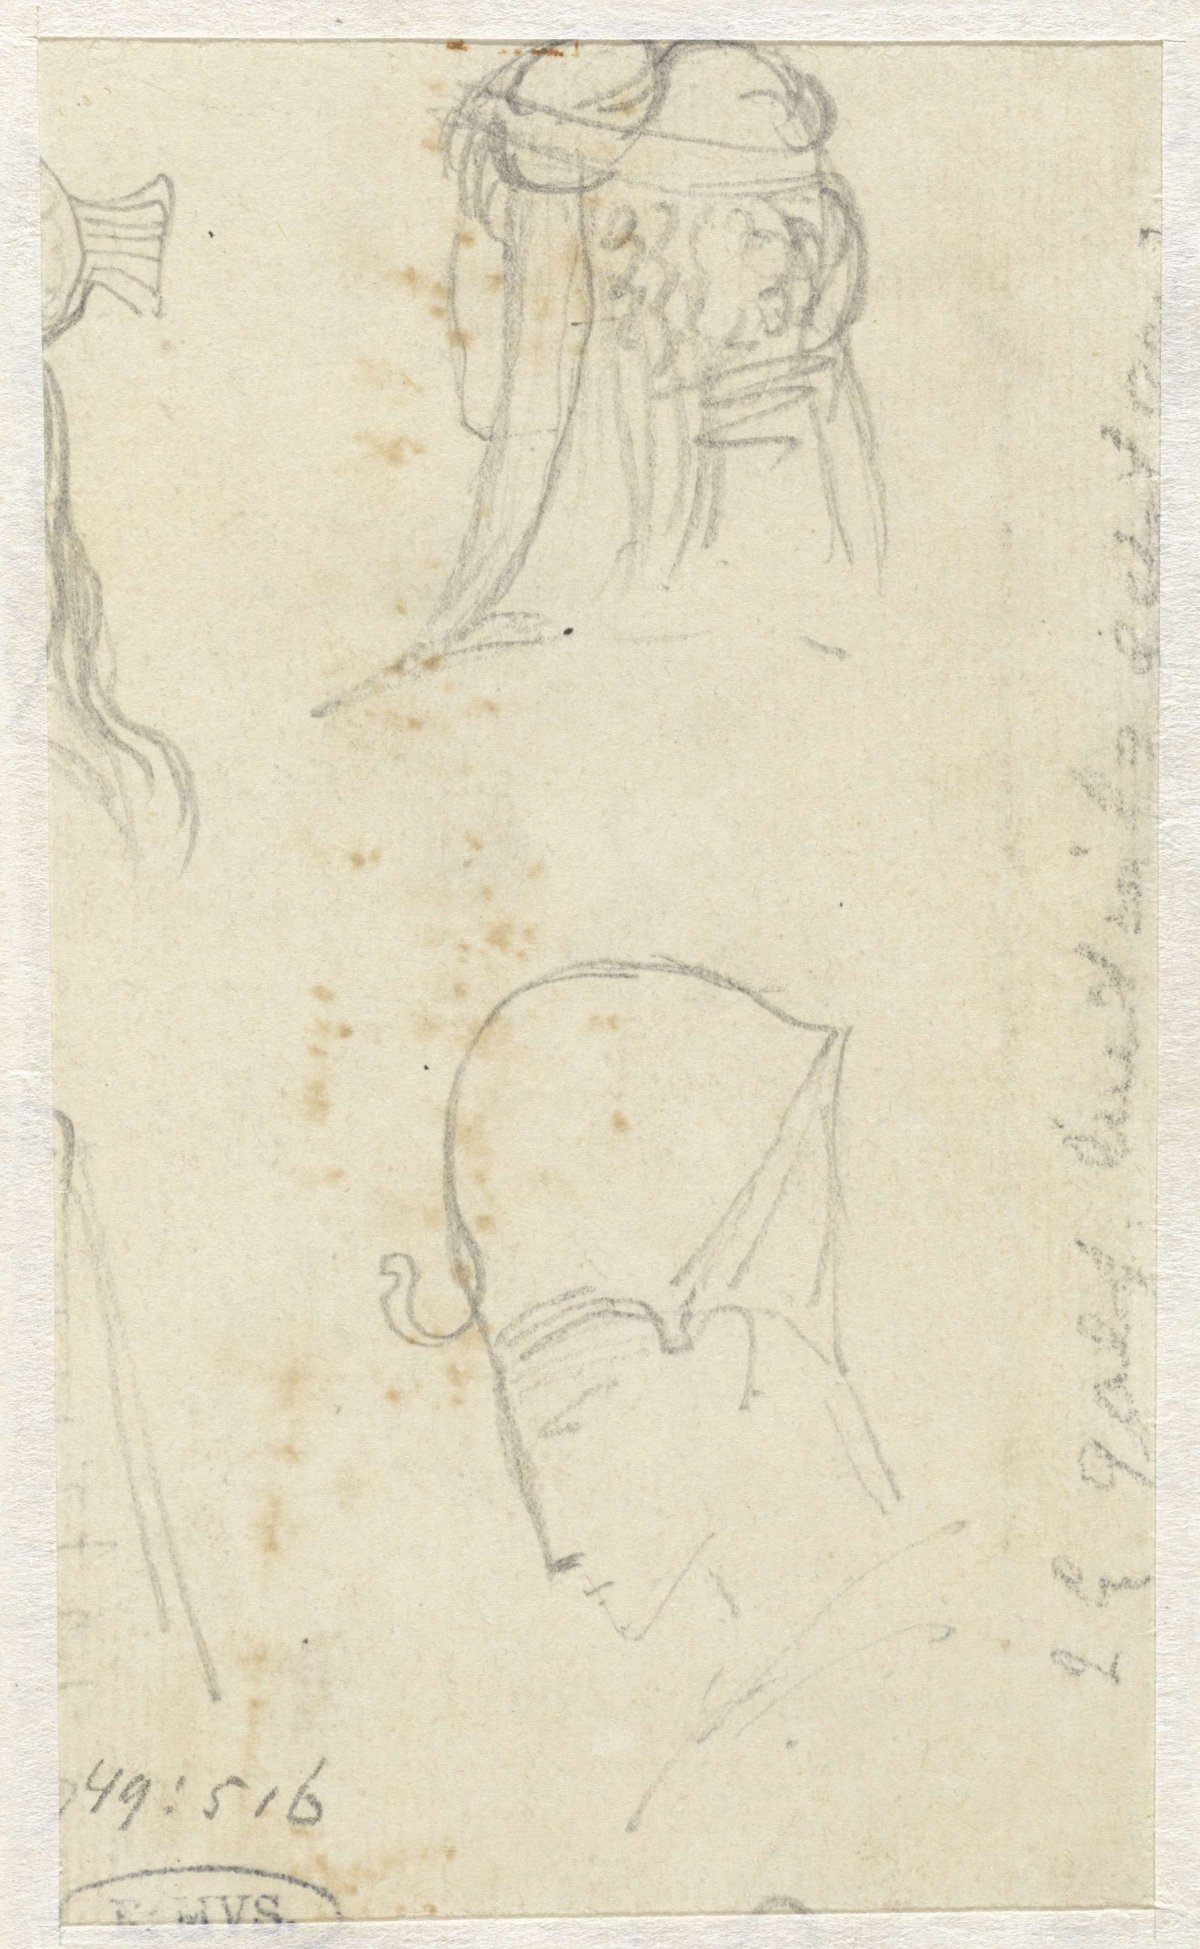 Sketches of Egyptian headgear, Matthijs Maris, 1849 - 1917